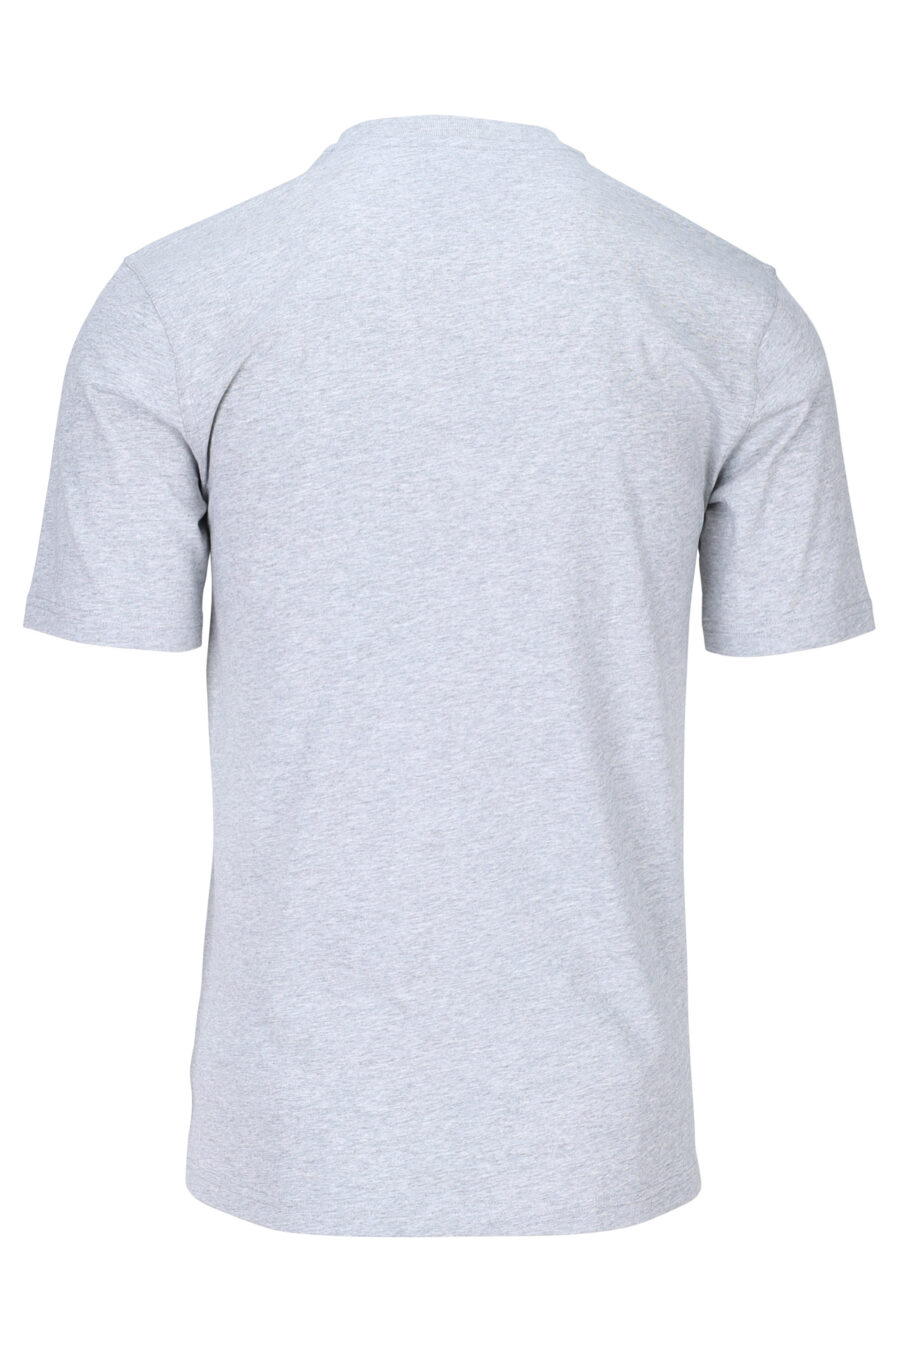 Graues T-Shirt mit Mini-Logo "teddy tailor" - 667113150802 1